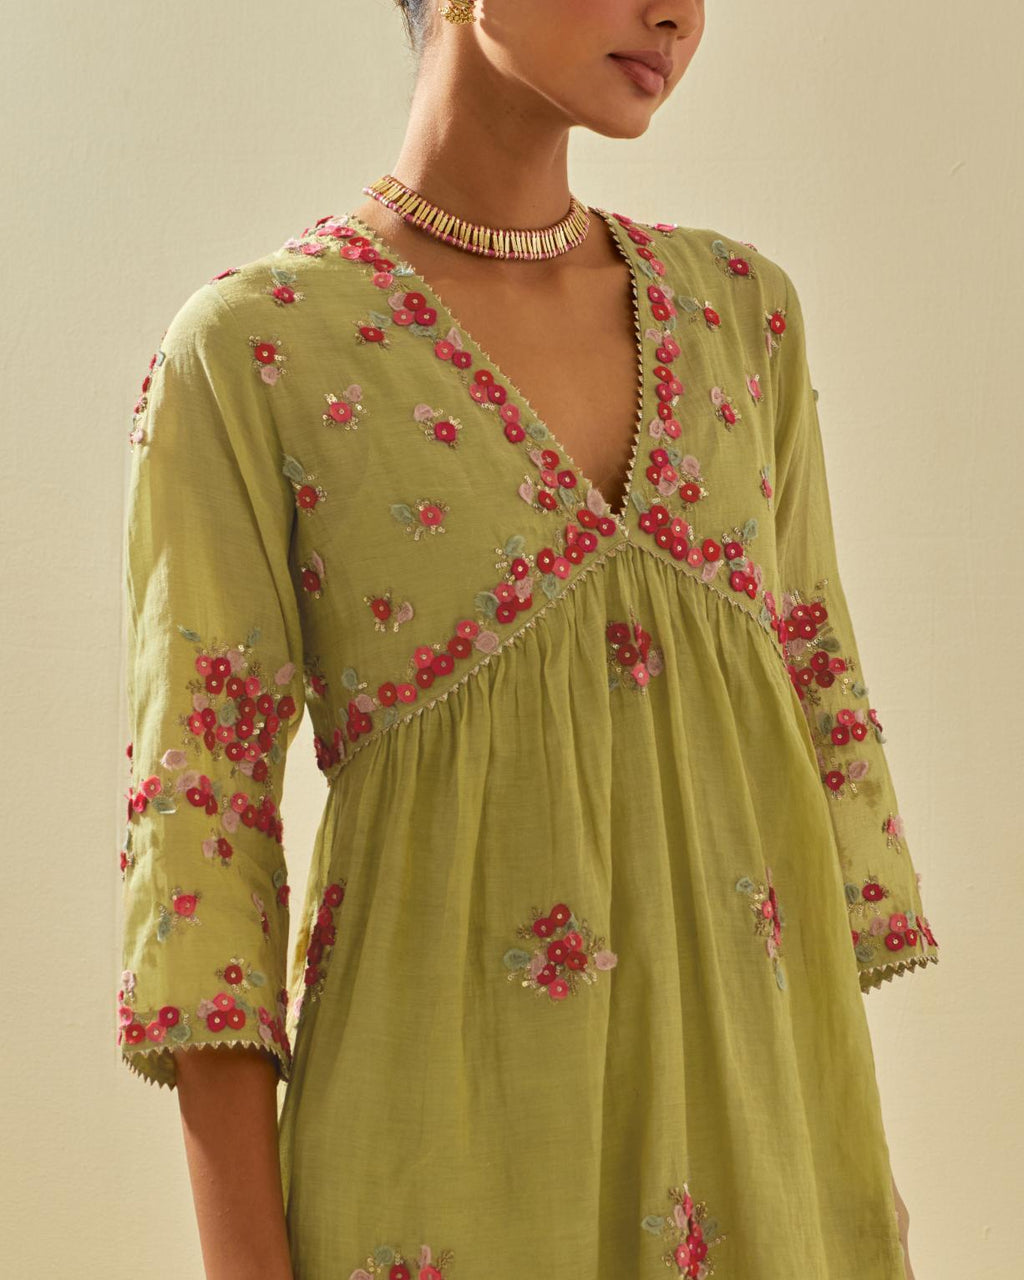 Green tissue chanderi hand cut silk flower embroidered kurta dress set with fine gathers at empire line.